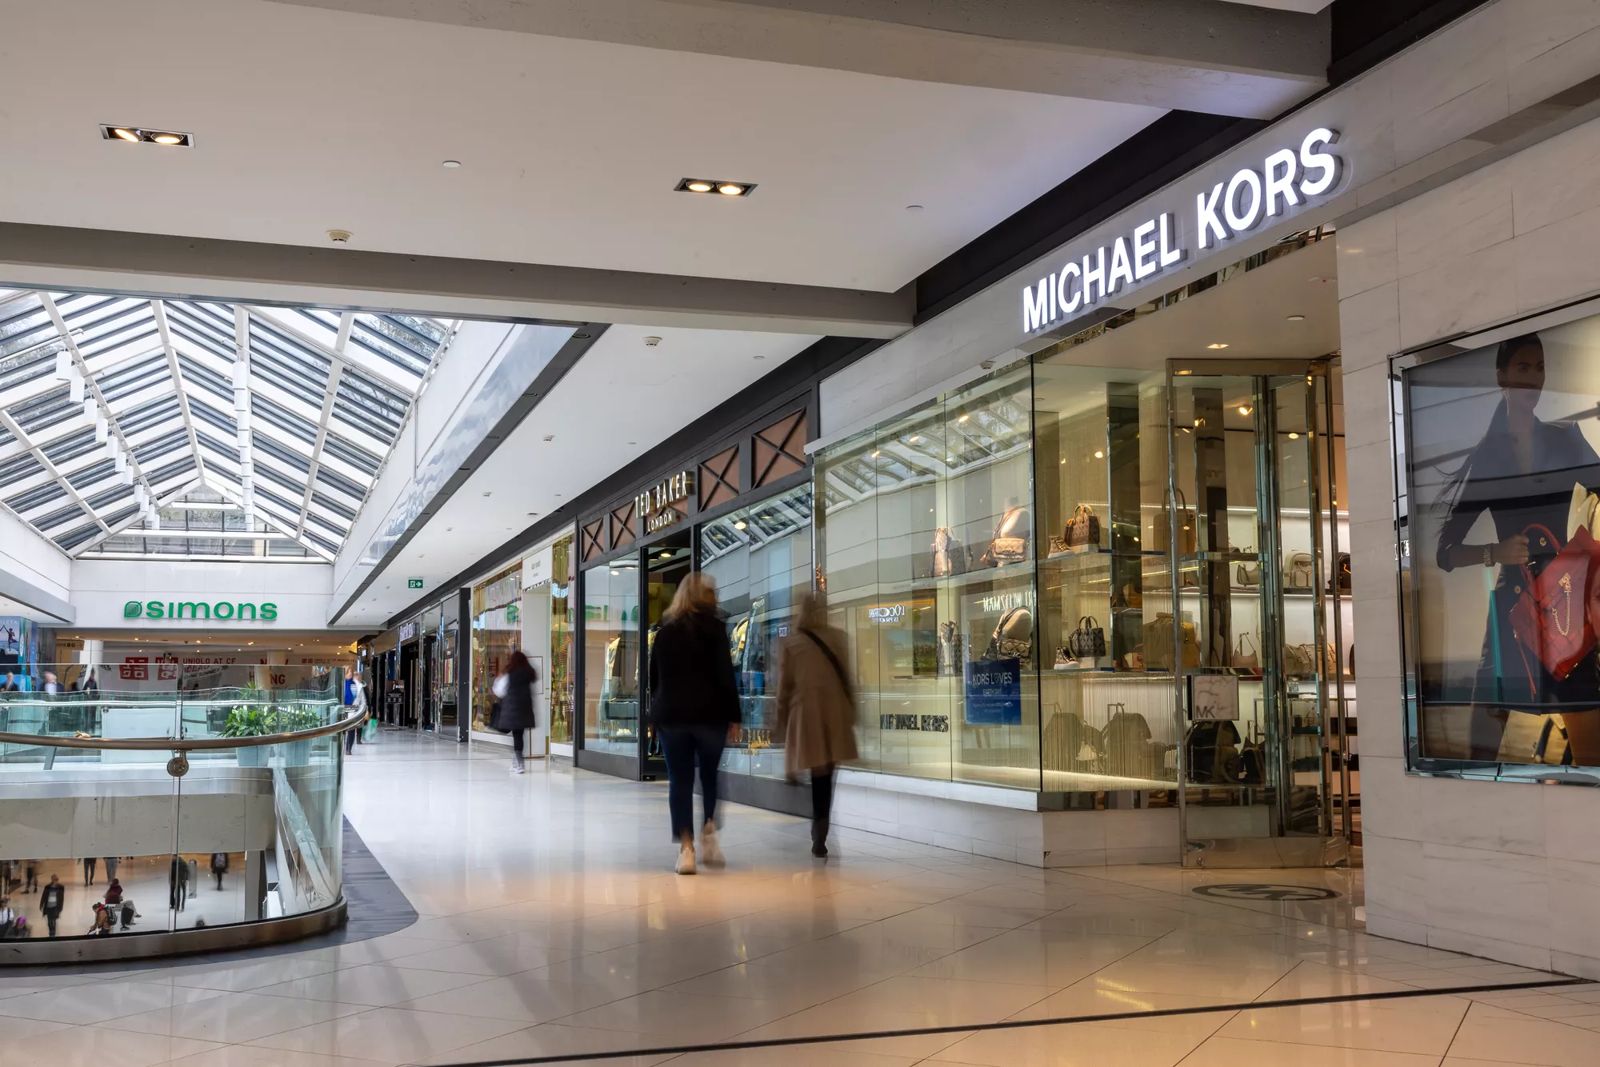 [Retail] [CF Rideau center] - Michael Kors